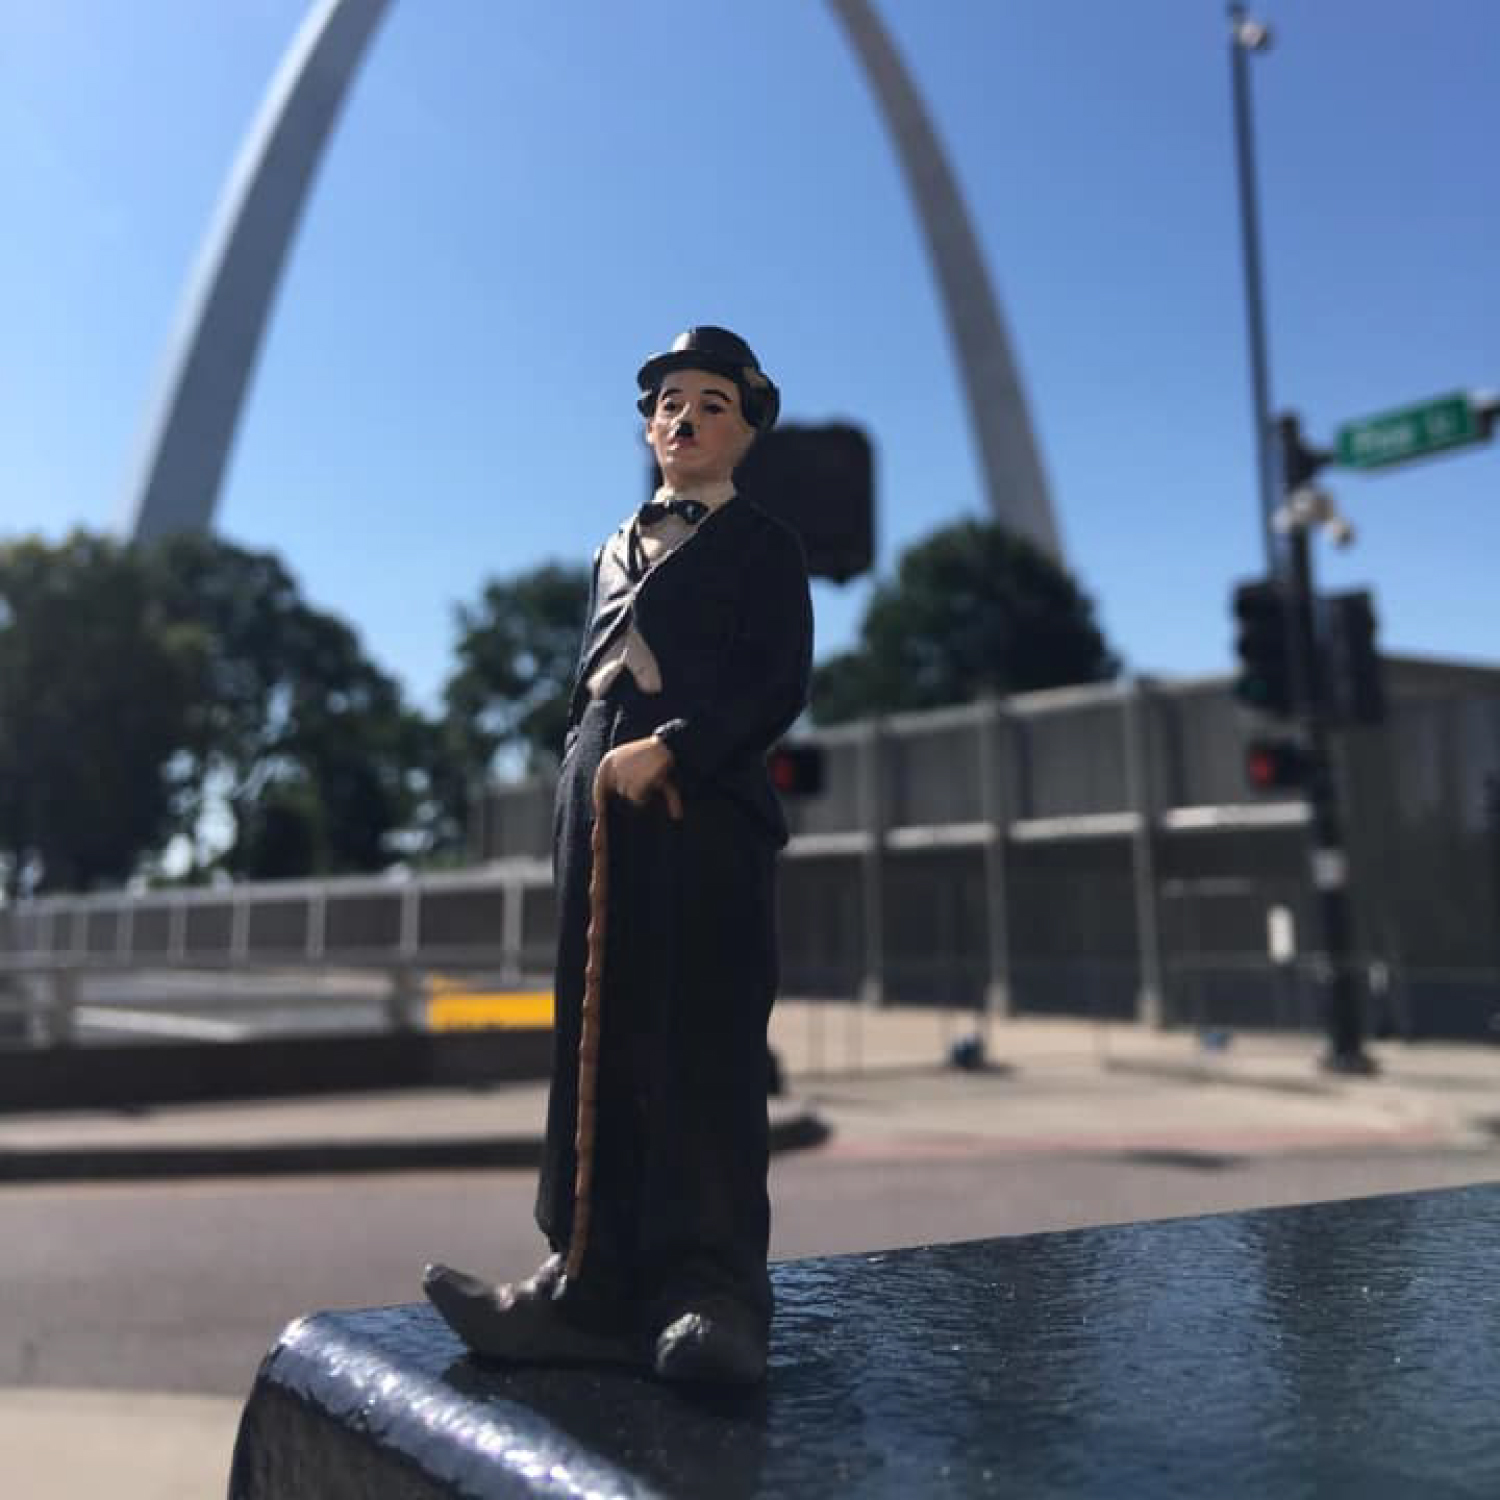 Gateway-Arch, St.-Louis, Missouri